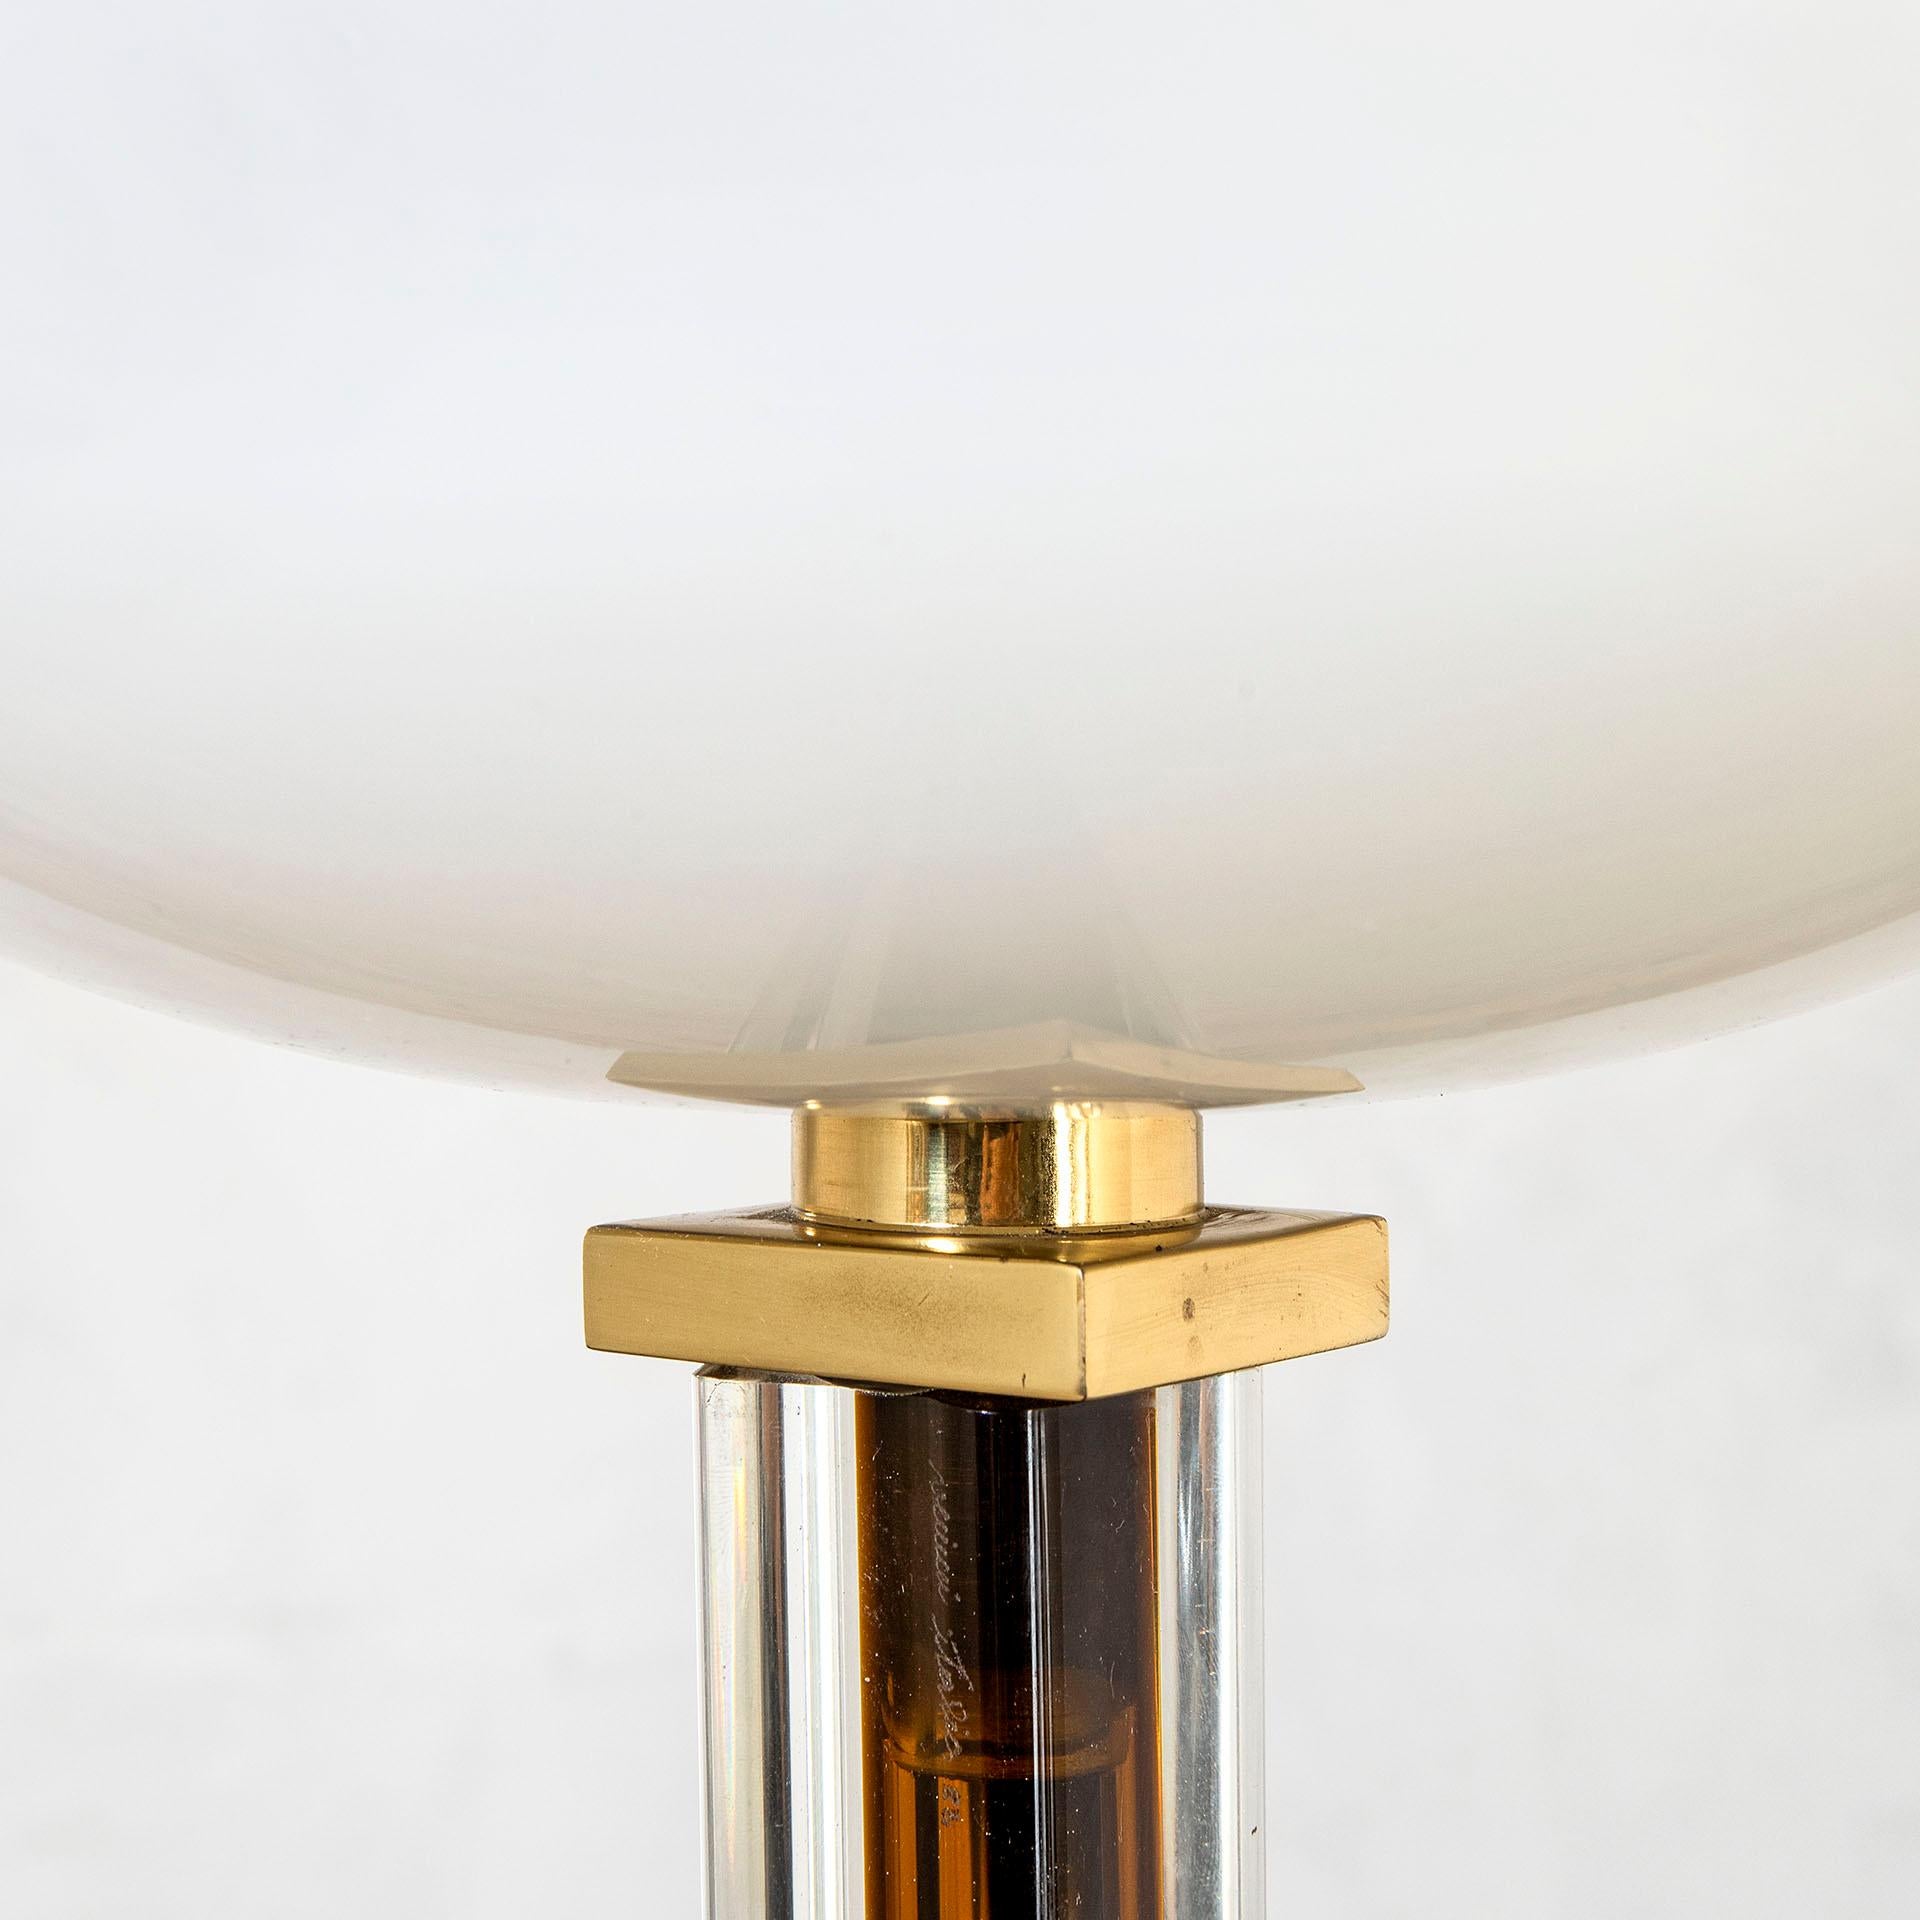 Italian 20th Century Venini Floor Lamp Mod. Tolboi in Murano Glass and Metal, 80s For Sale